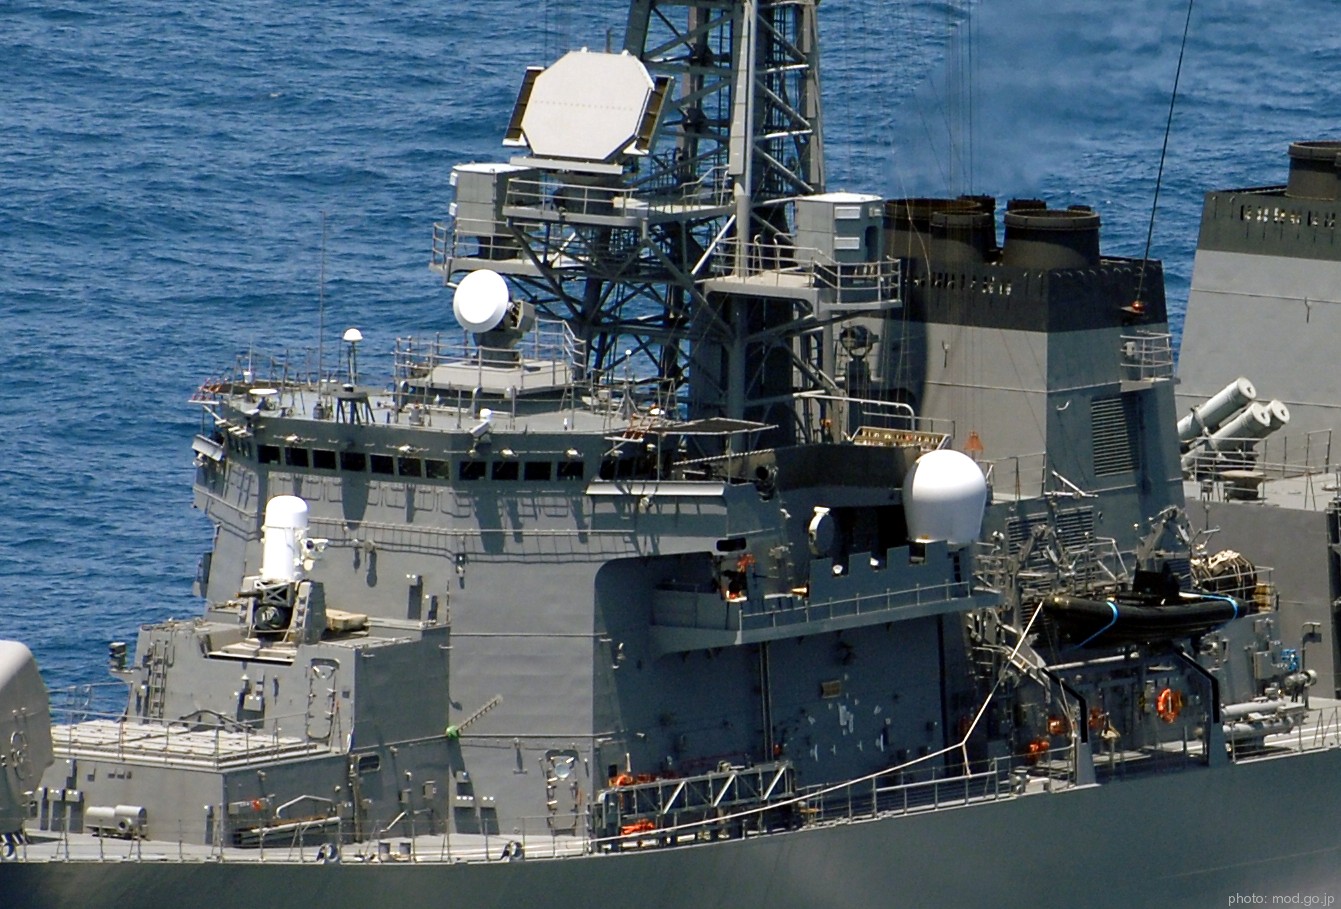 takanami class destroyer japan maritime self defense force jmsdf superstructure details 02